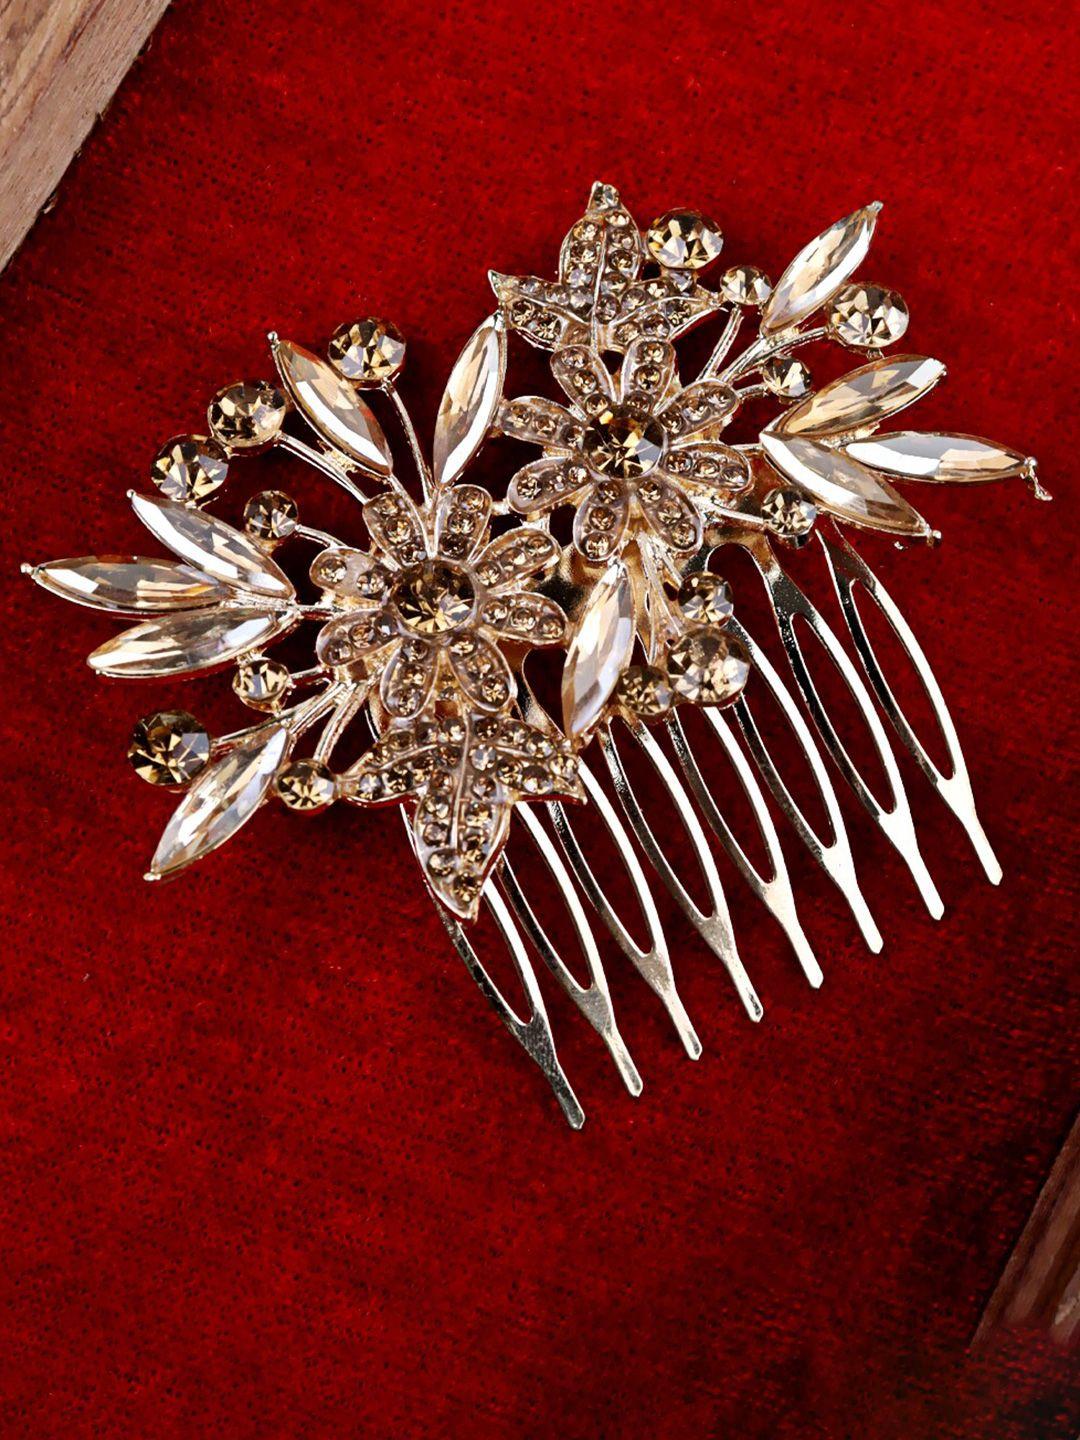 fimbul women crystal bride wedding hair comb pin